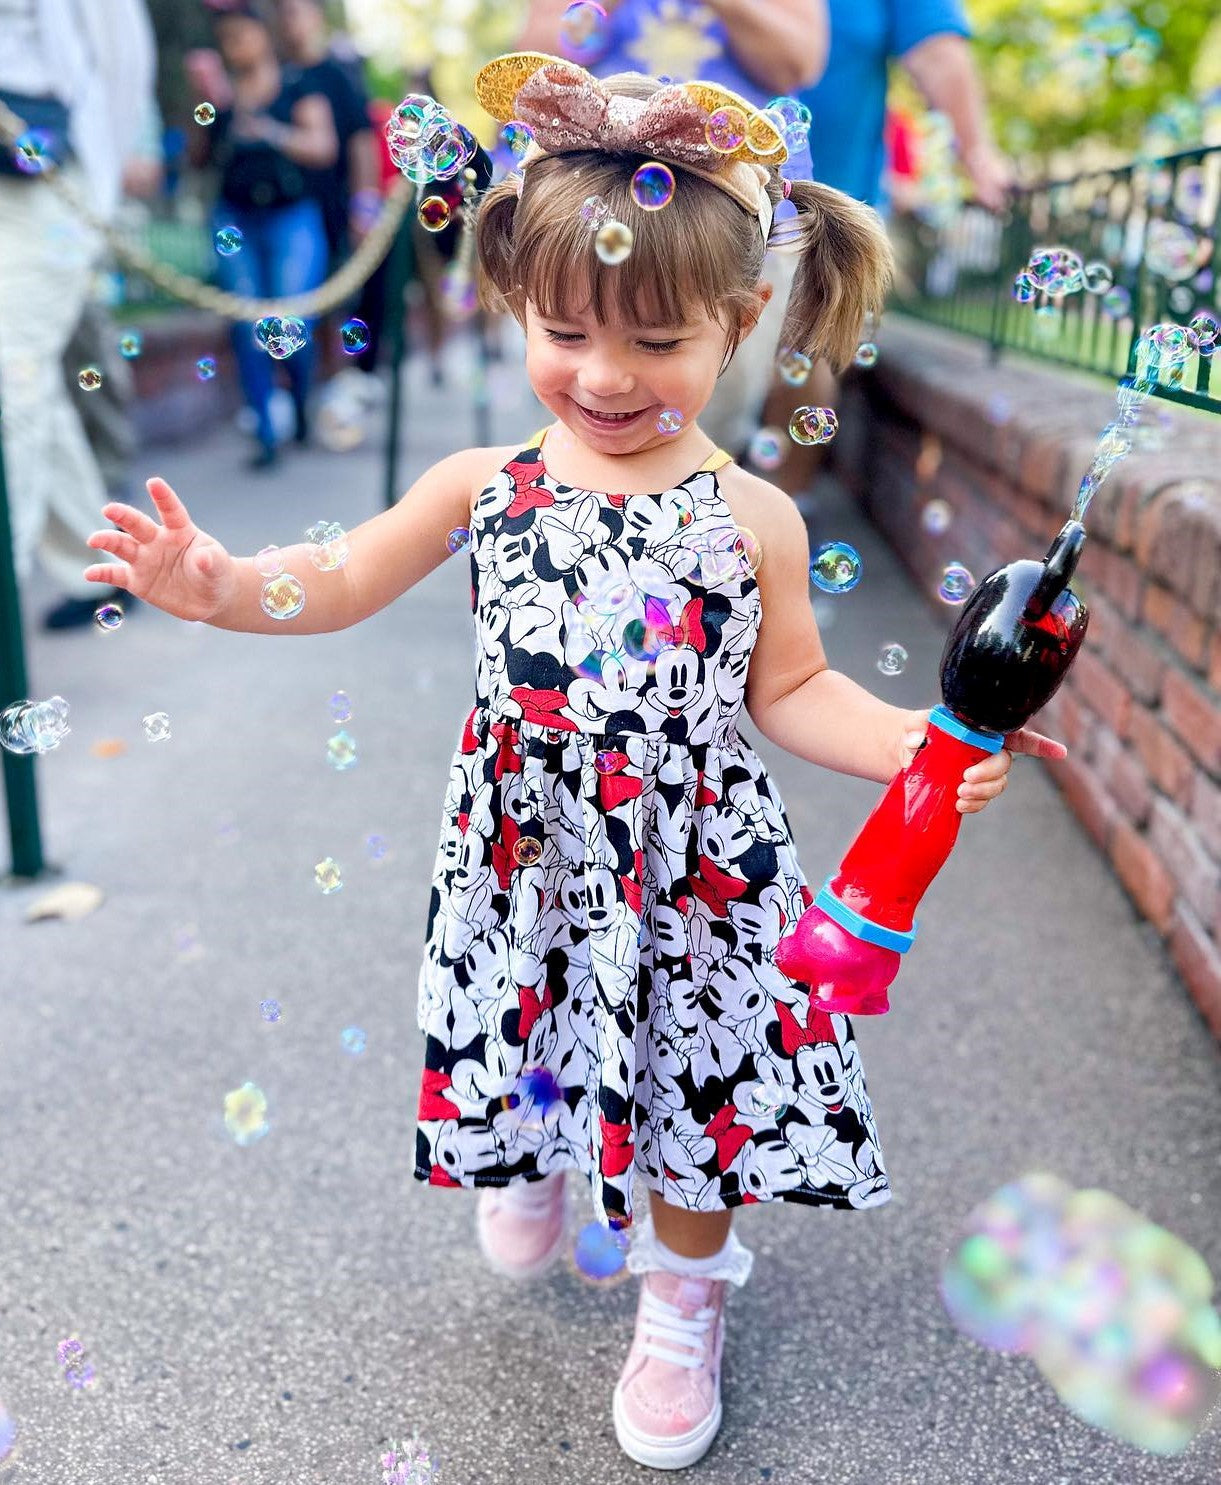 Girls Infant Toddler Minnie Mouse Boho Sundress Twirl Dress tie back style